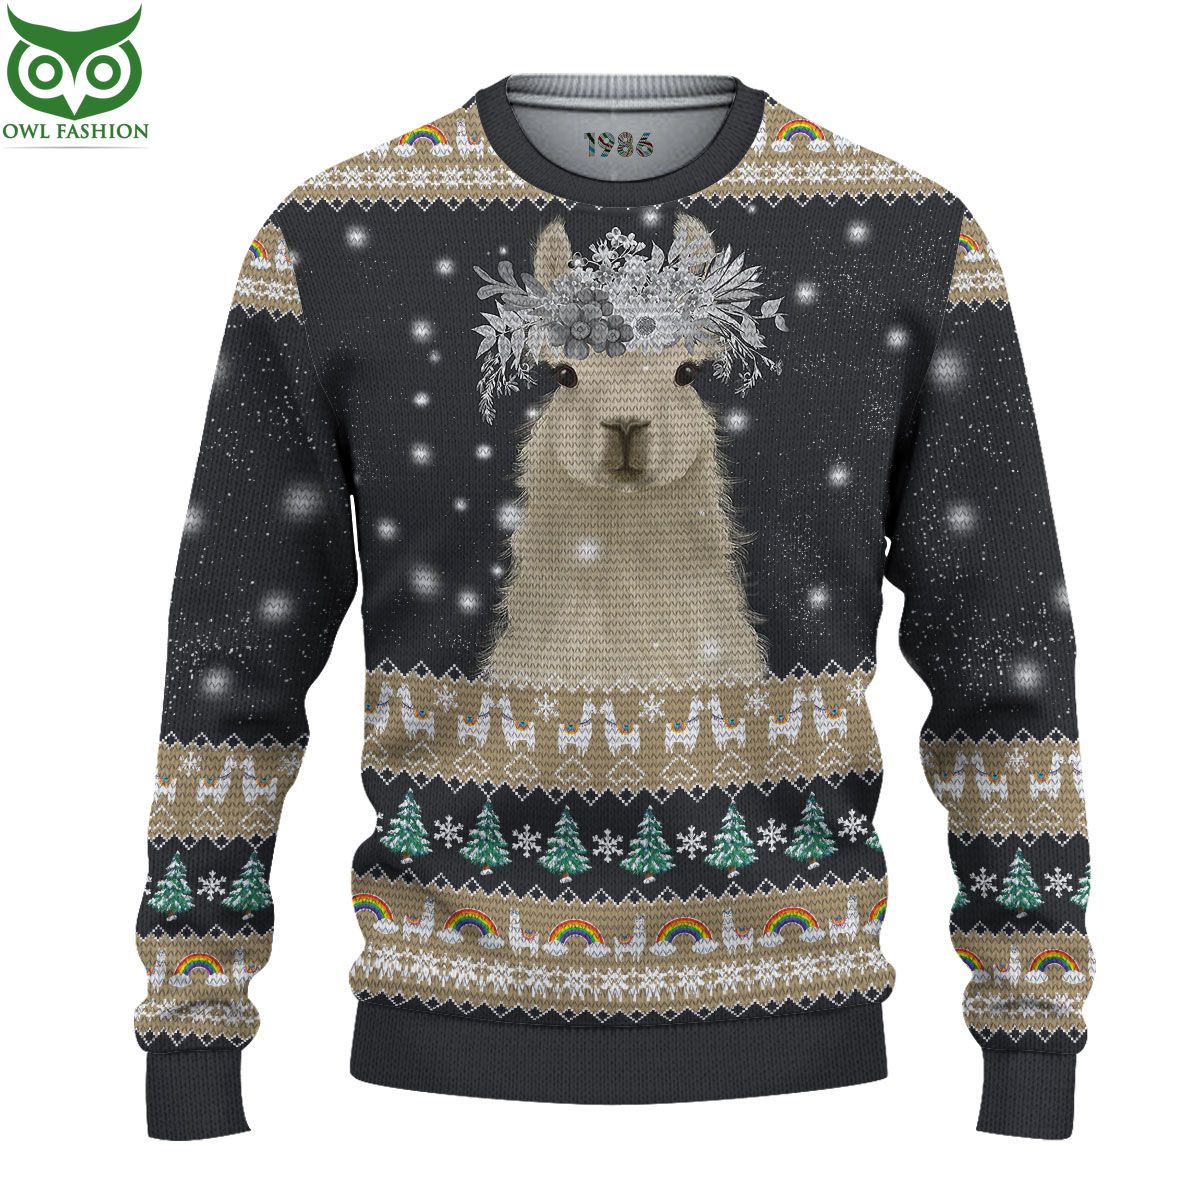 amazing llama christmas sweater 3d aop ugly sweater jumper 1 jqIGh.jpg